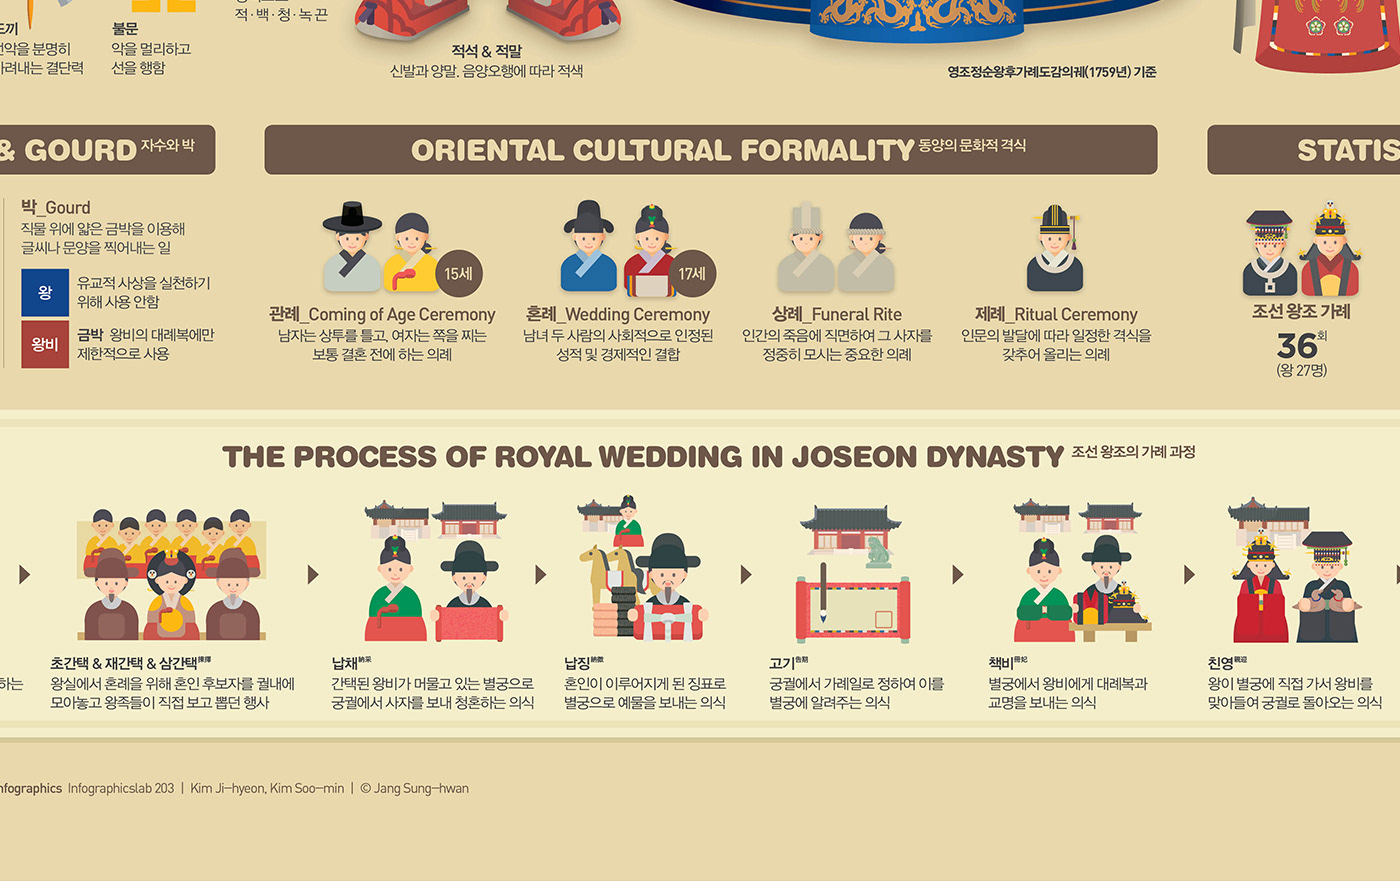 #203x costume dataviualization design graphic infographic poster streeth the korean traditional